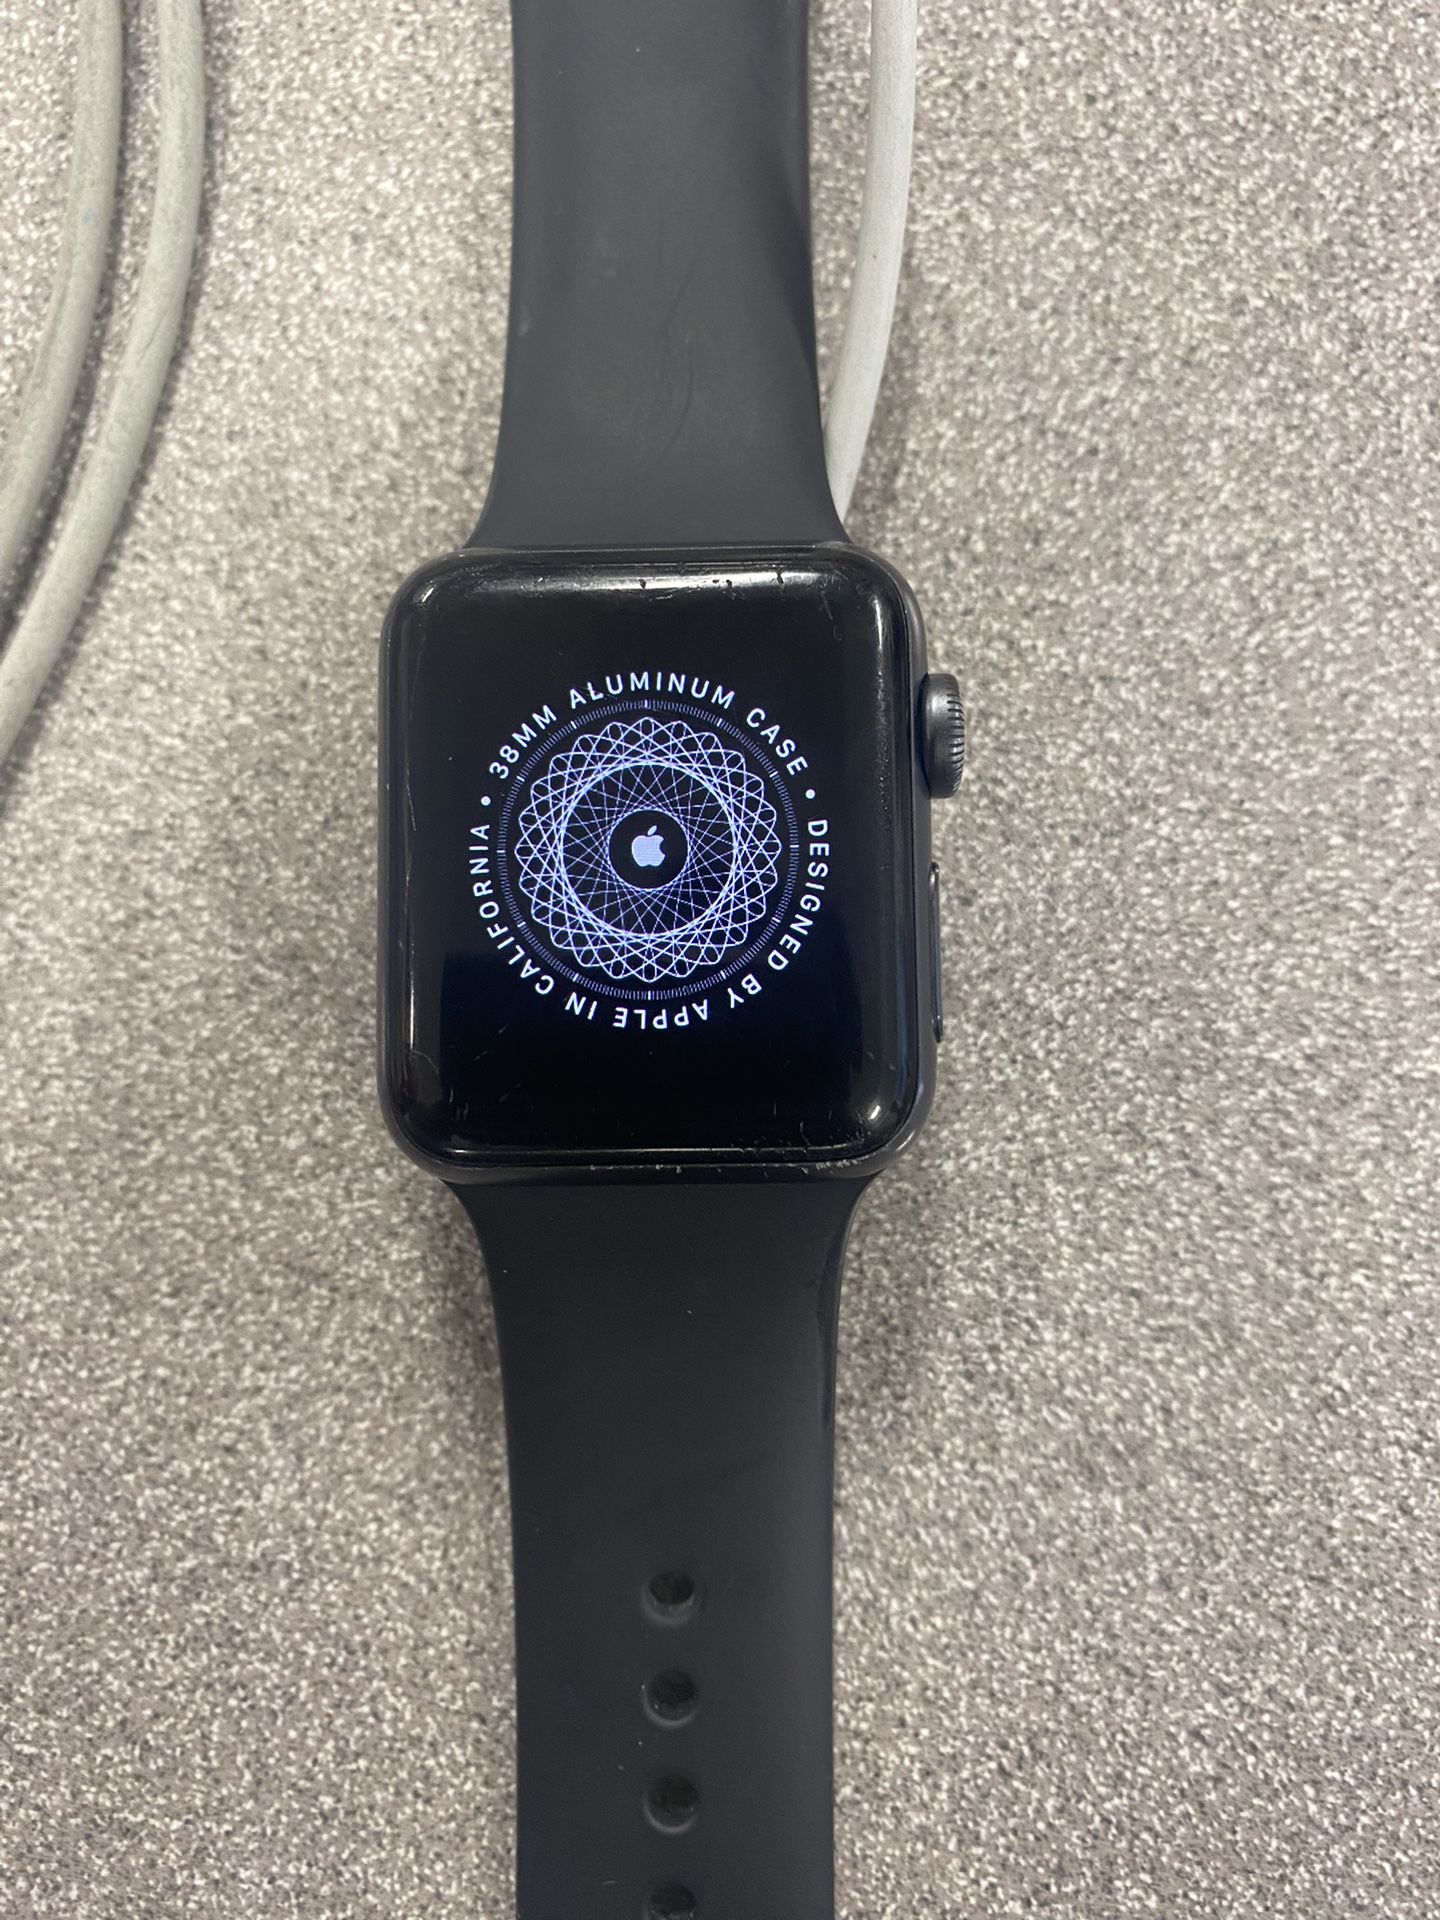 Apple Watch Series 3 (ACTIVATION LOCKED)